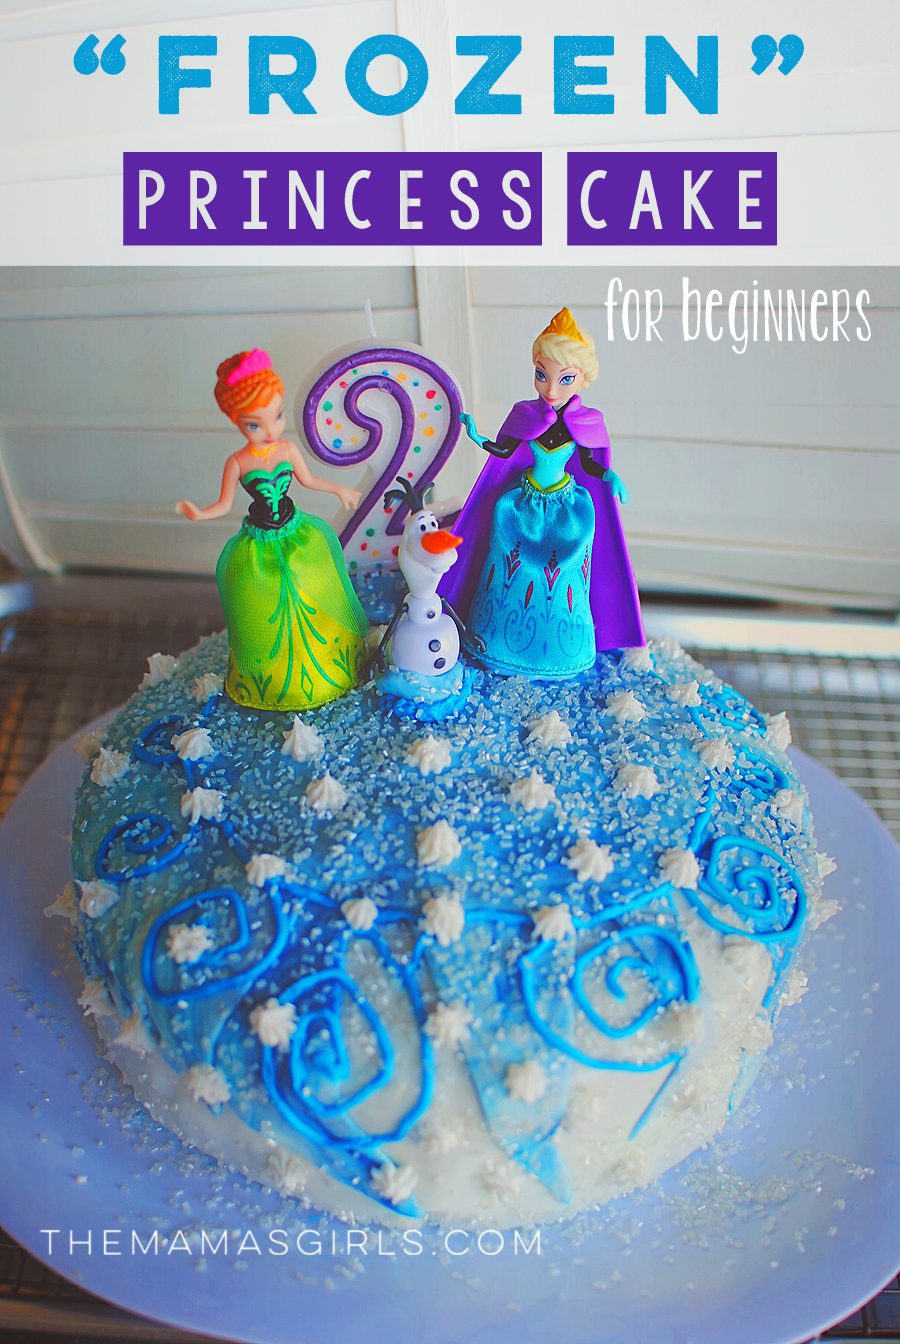 Frozen Princess Cake Tutorial for Beginners